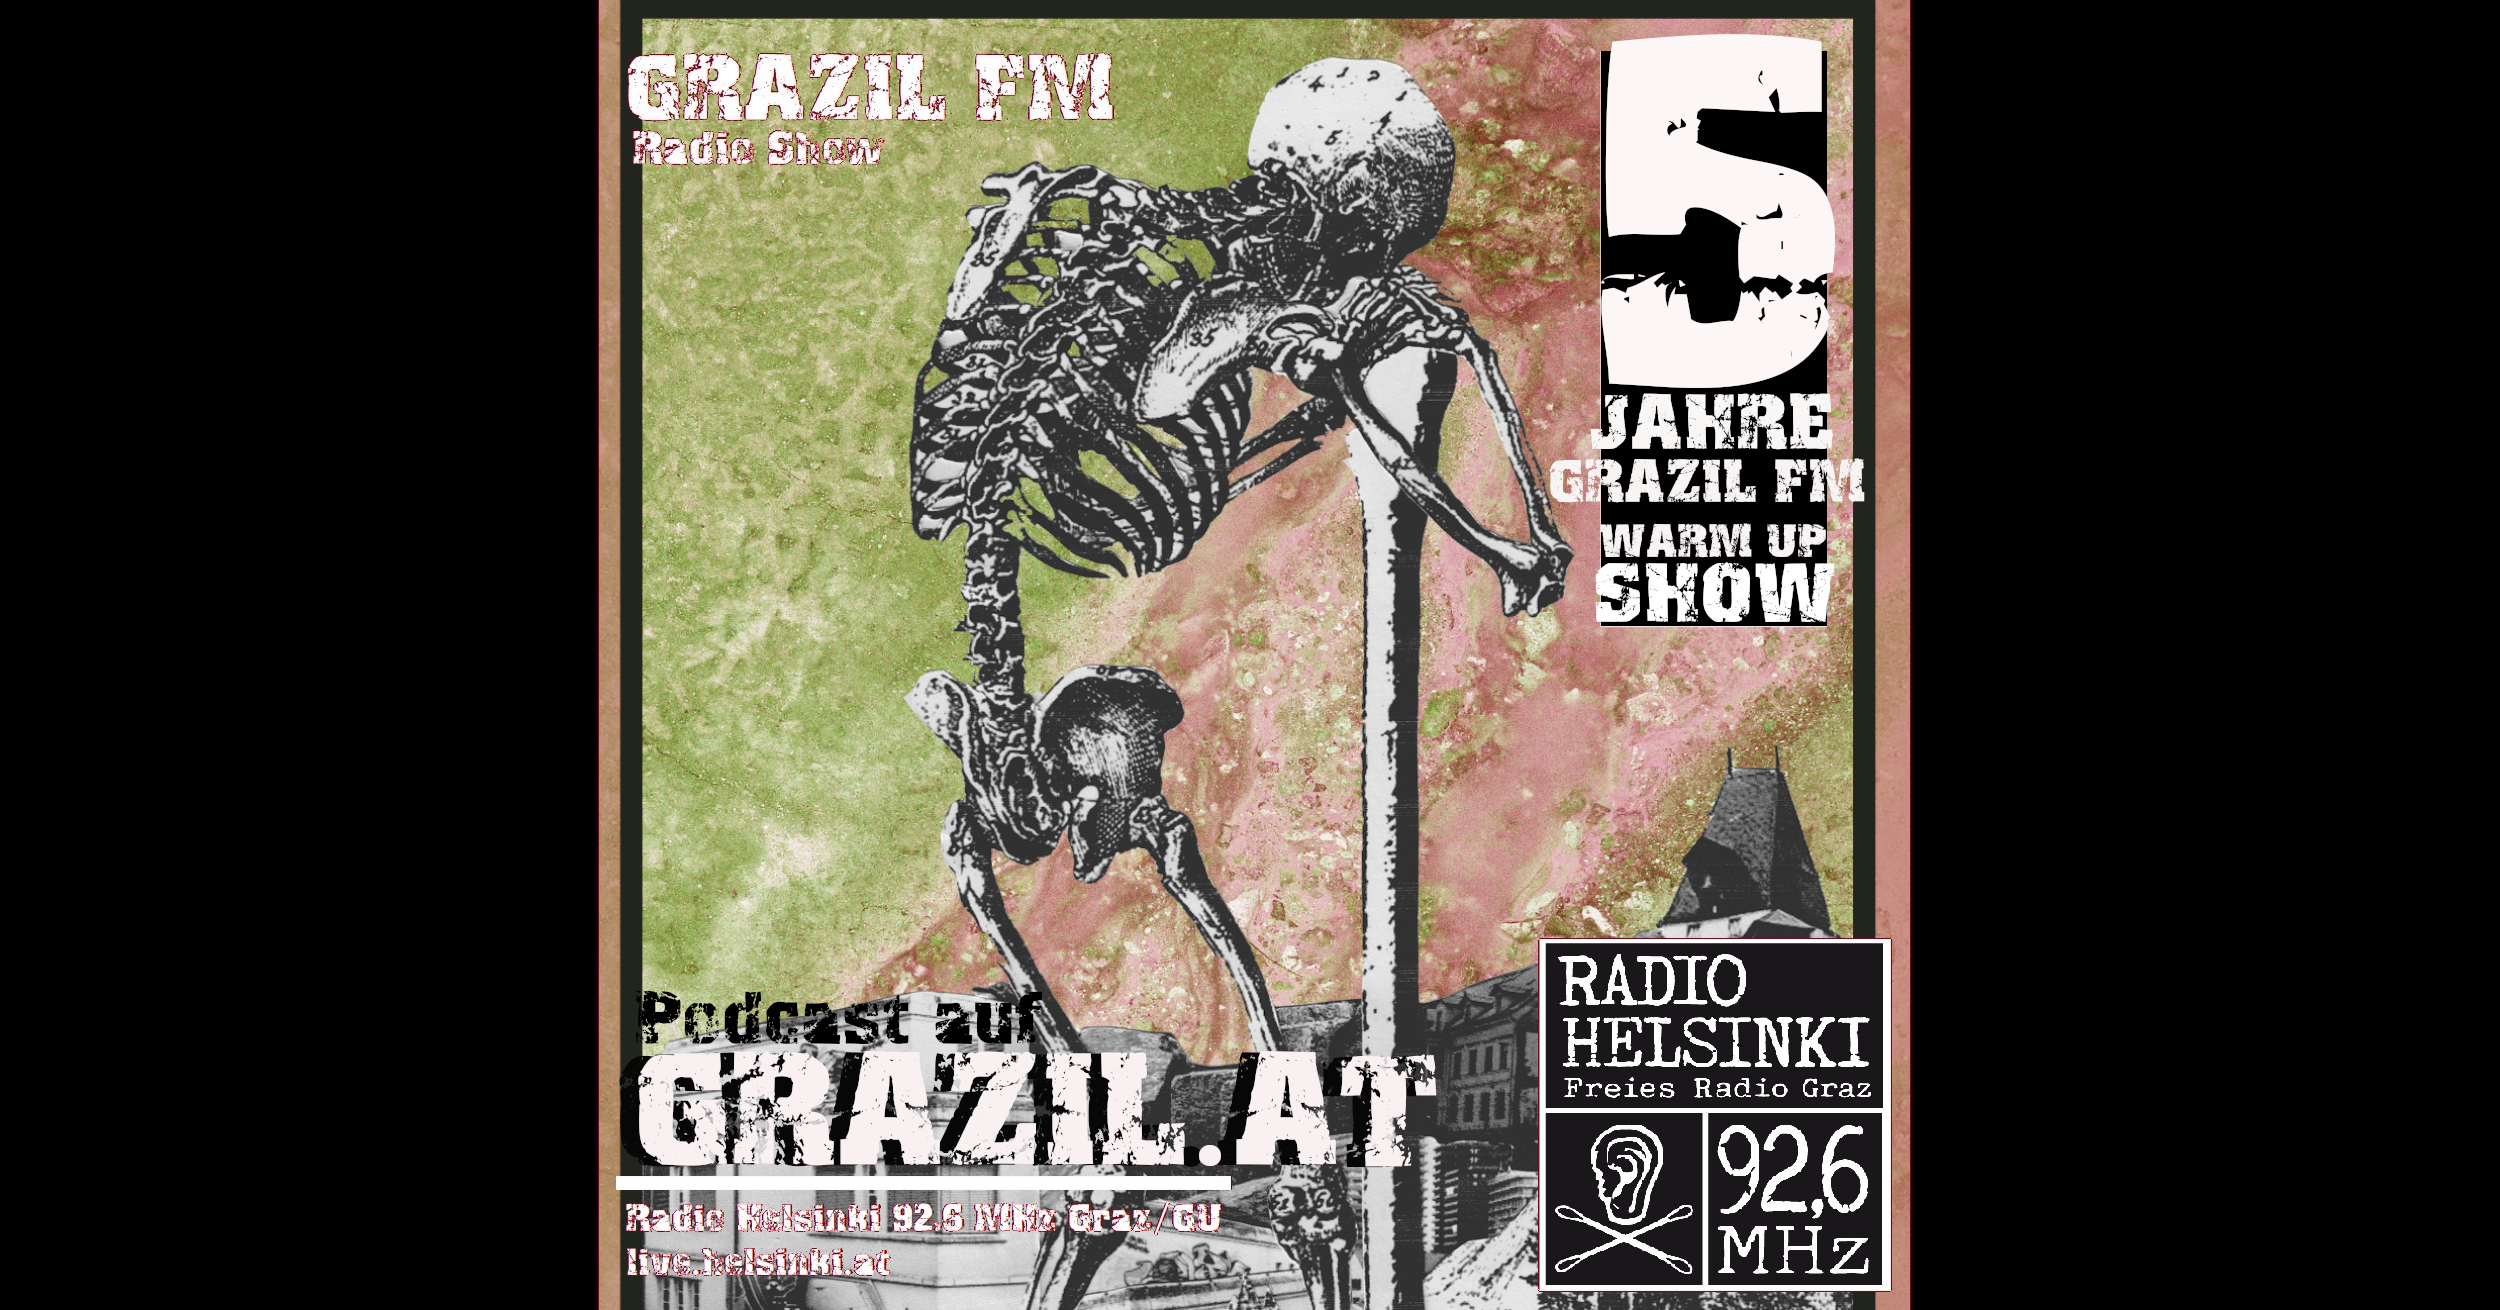 5 Jahre grazil FM Warm Up Show Radio Helsinki Cle Pecher grazil Records